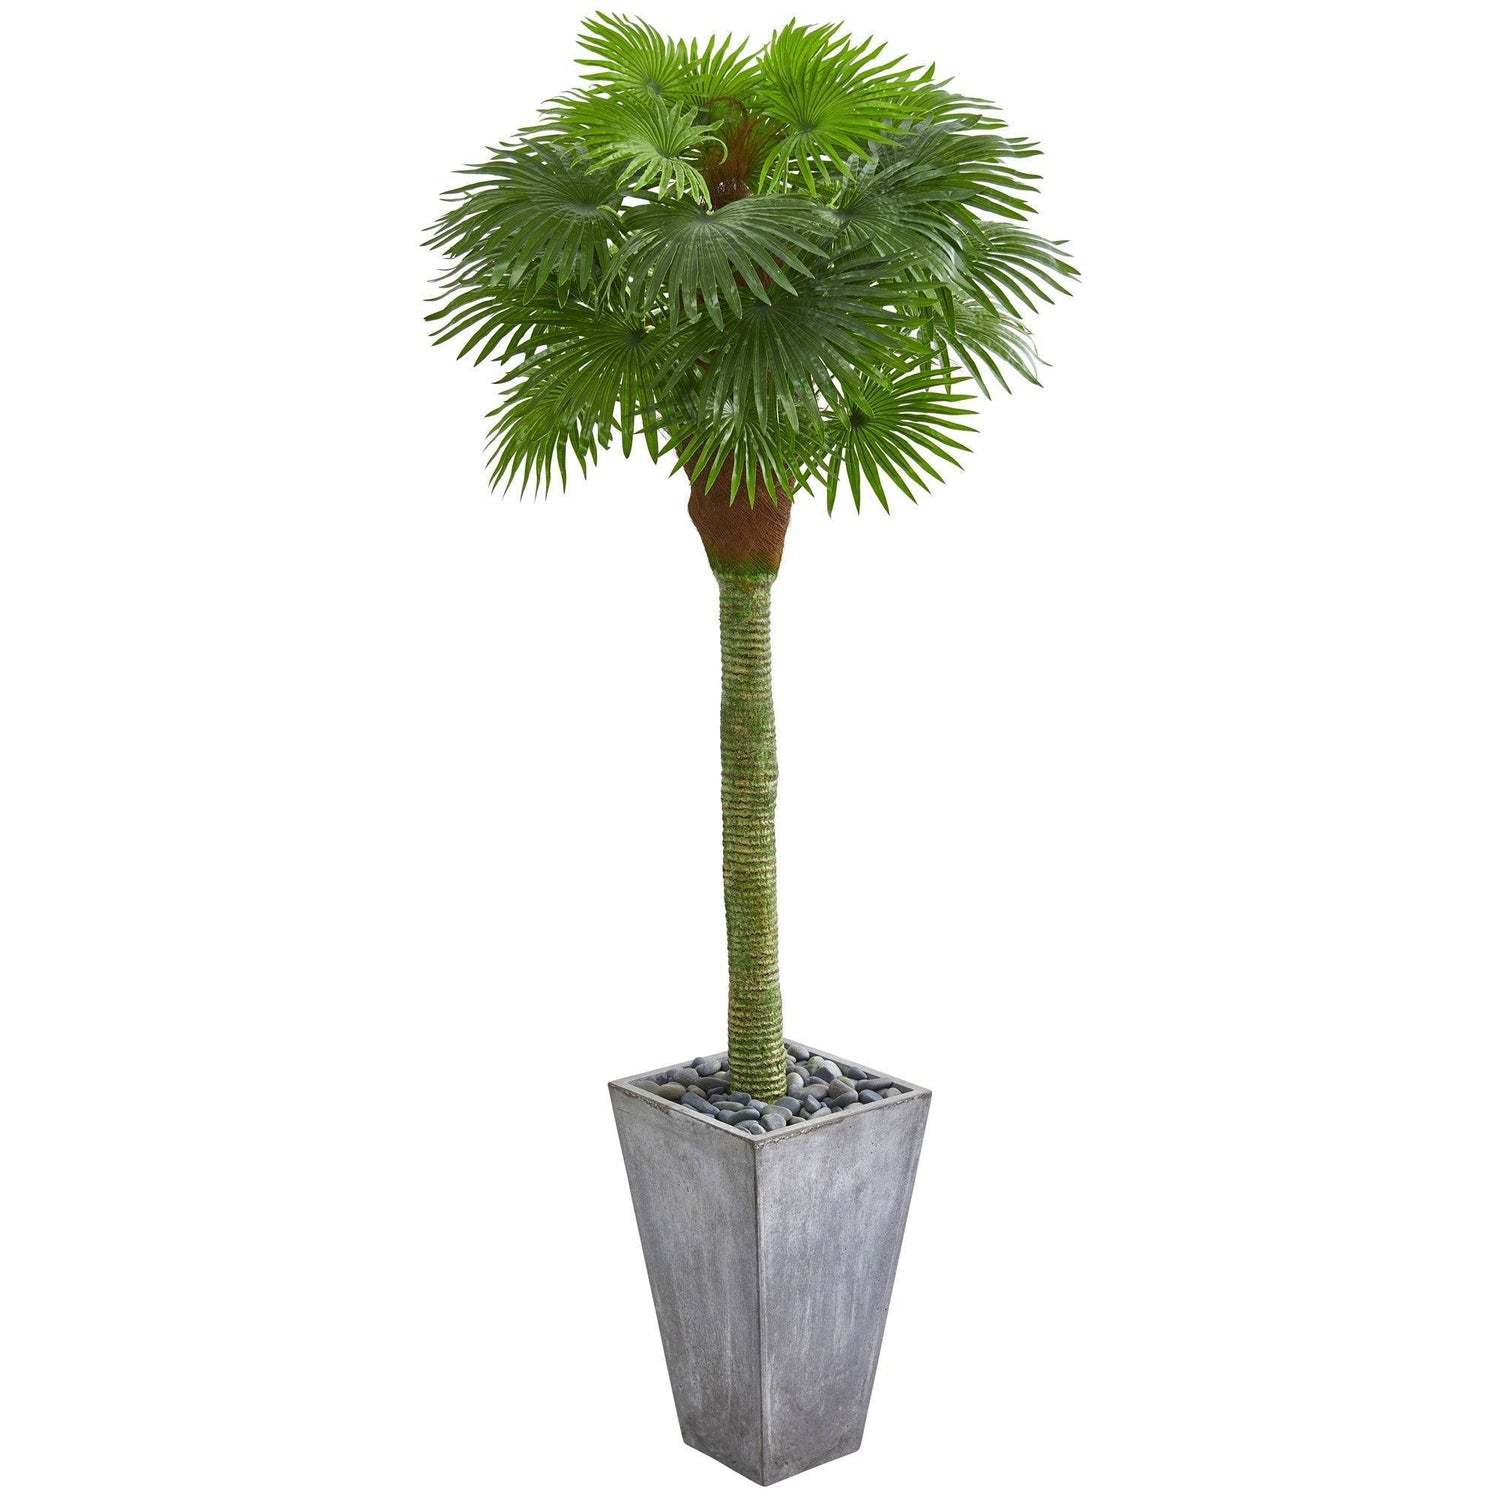 6.5’ Fan Palm Artificial Tree in Cement Planter (Indoor/Outdoor)